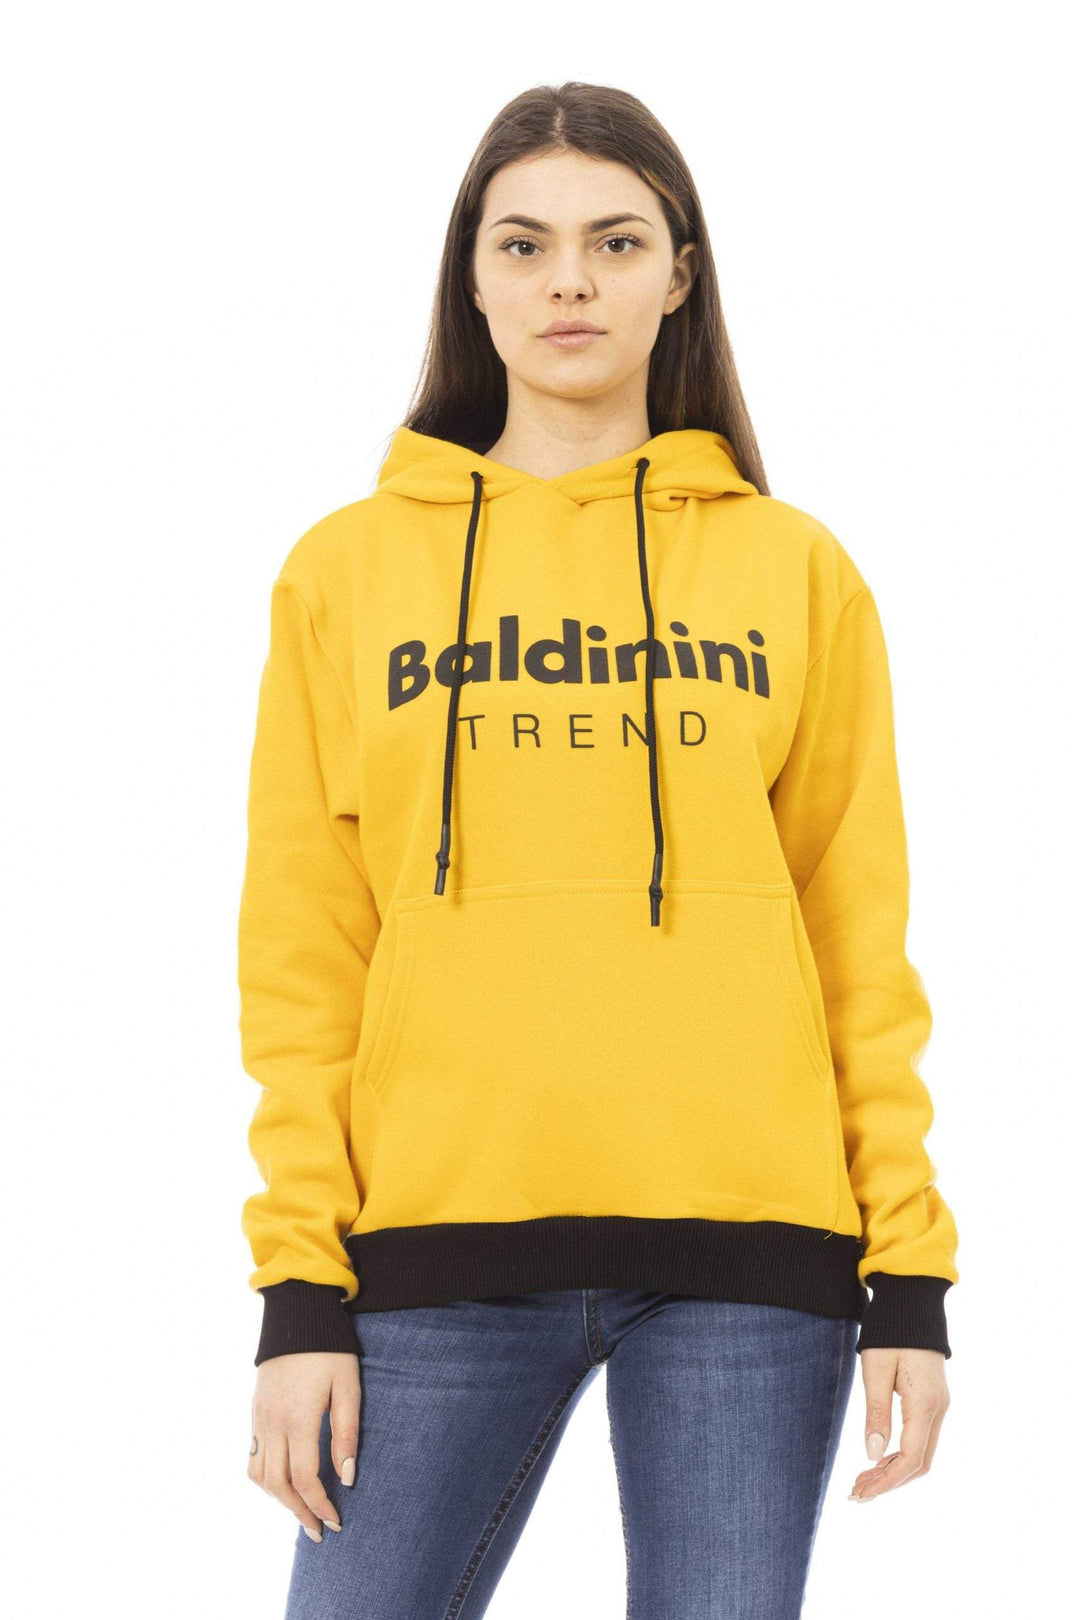 Baldinini Trend Yellow Cotton Sweater Baldinini Trend, feed-1, L, M, S, Sweaters - Women - Clothing, XL, XS, Yellow at SEYMAYKA